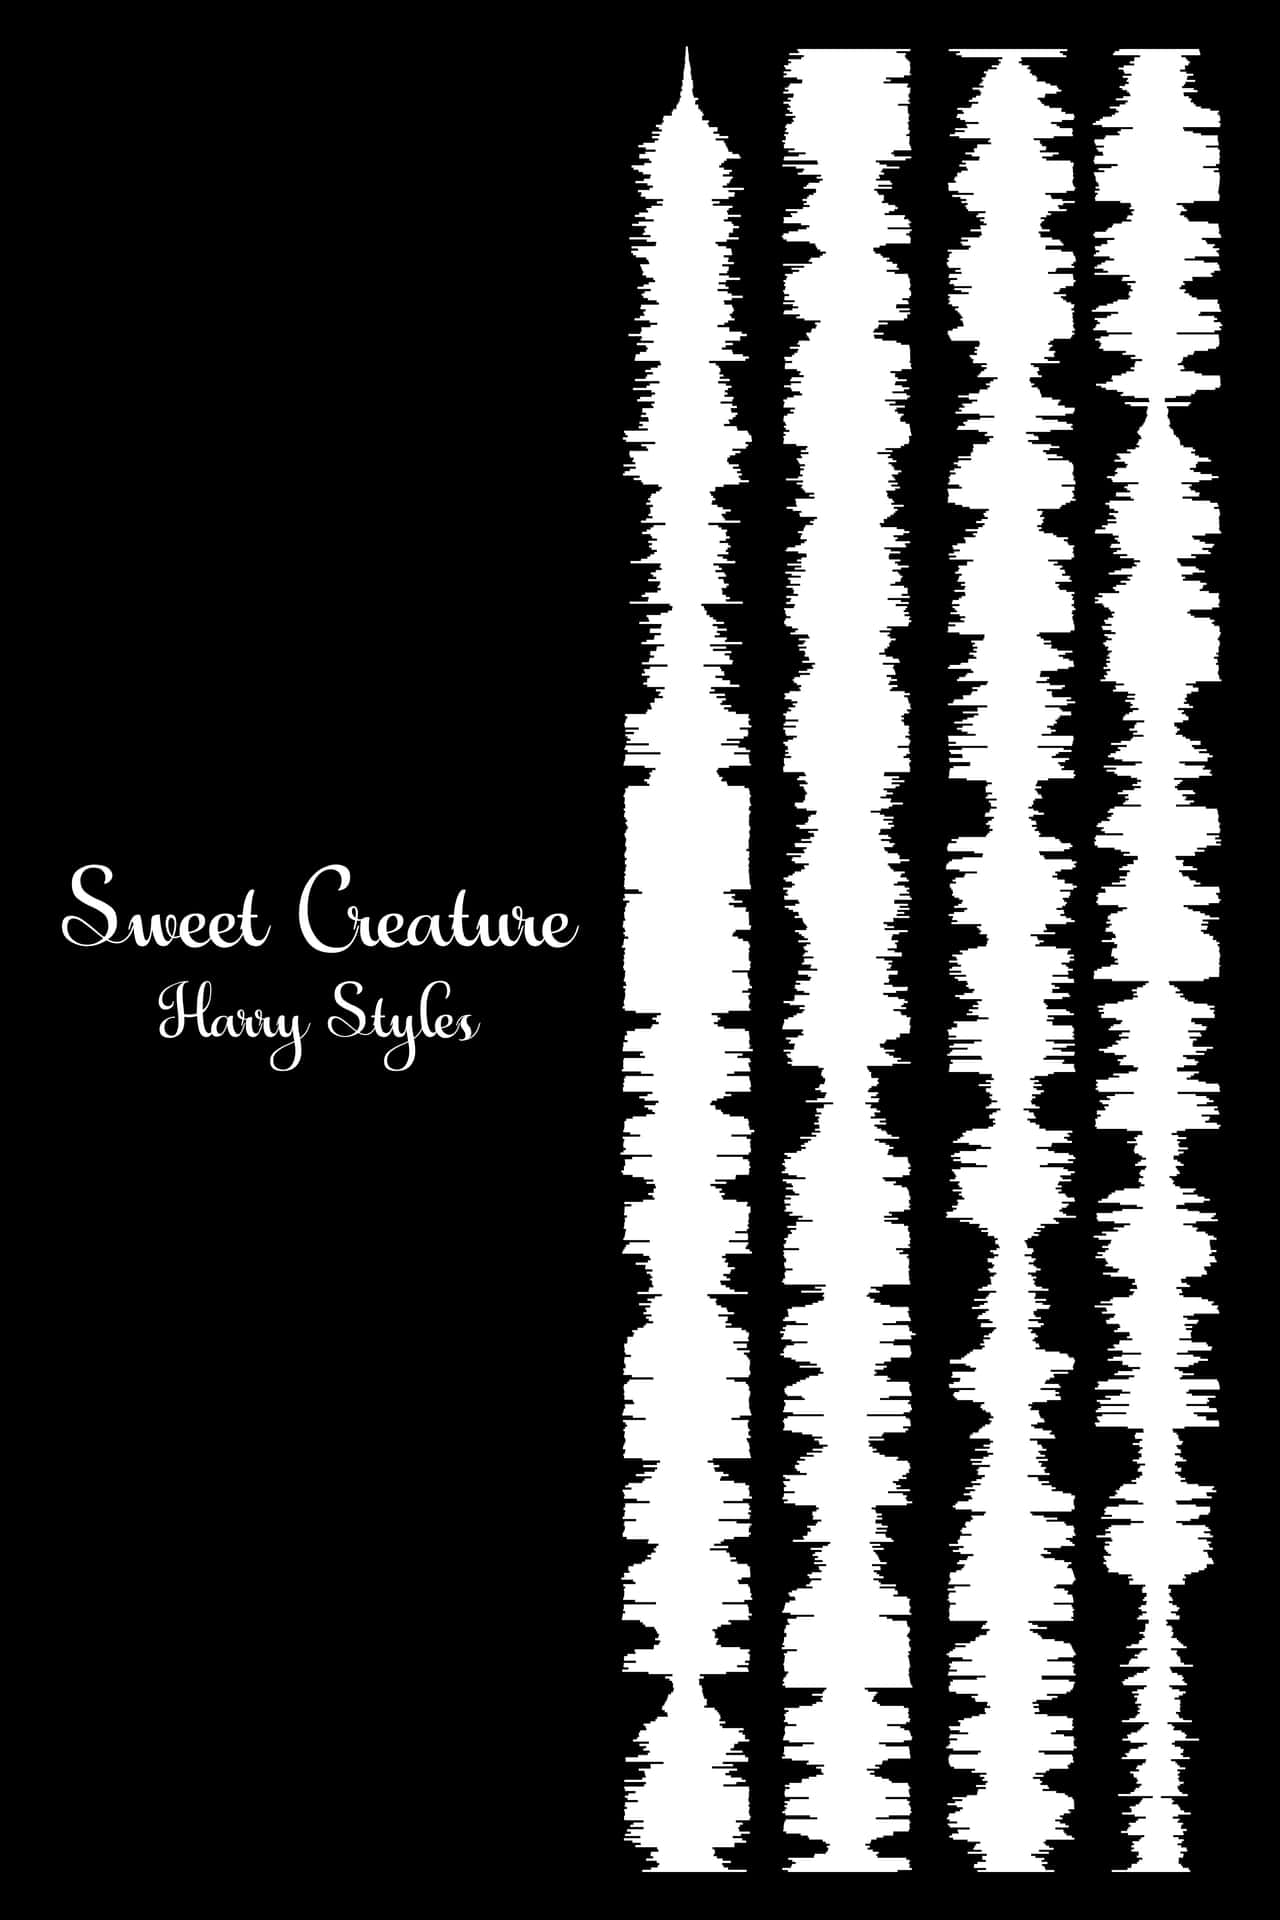 Sweet Creature Harry Styles Album Cover Wallpaper